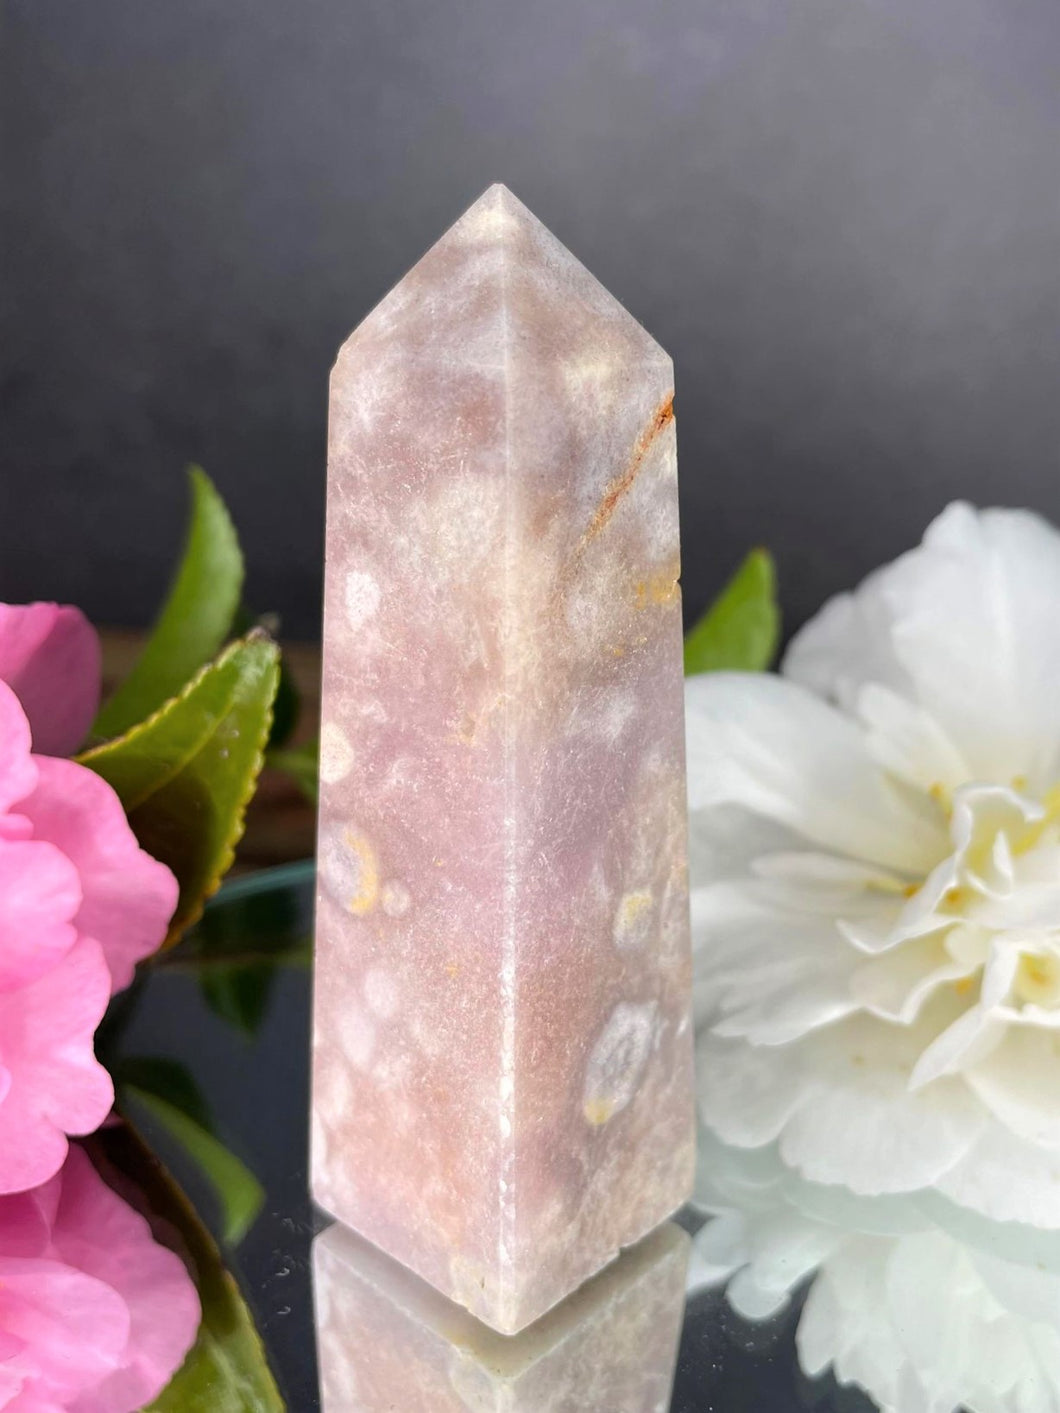 The Pink Amethyst Crystal Gemstone Tower